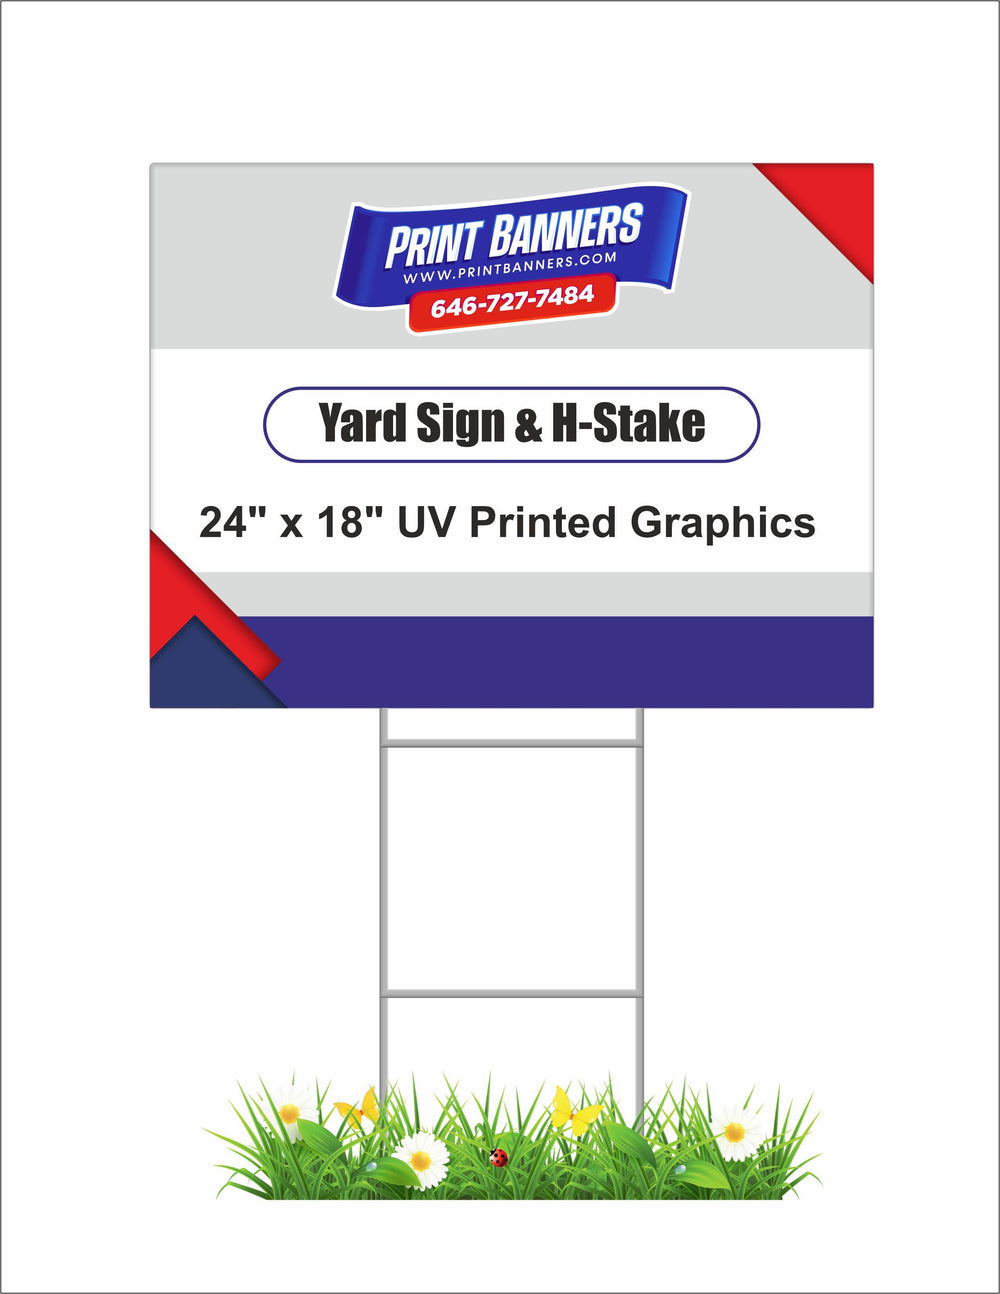 Yard Sign and H-Stake - PrintBanners